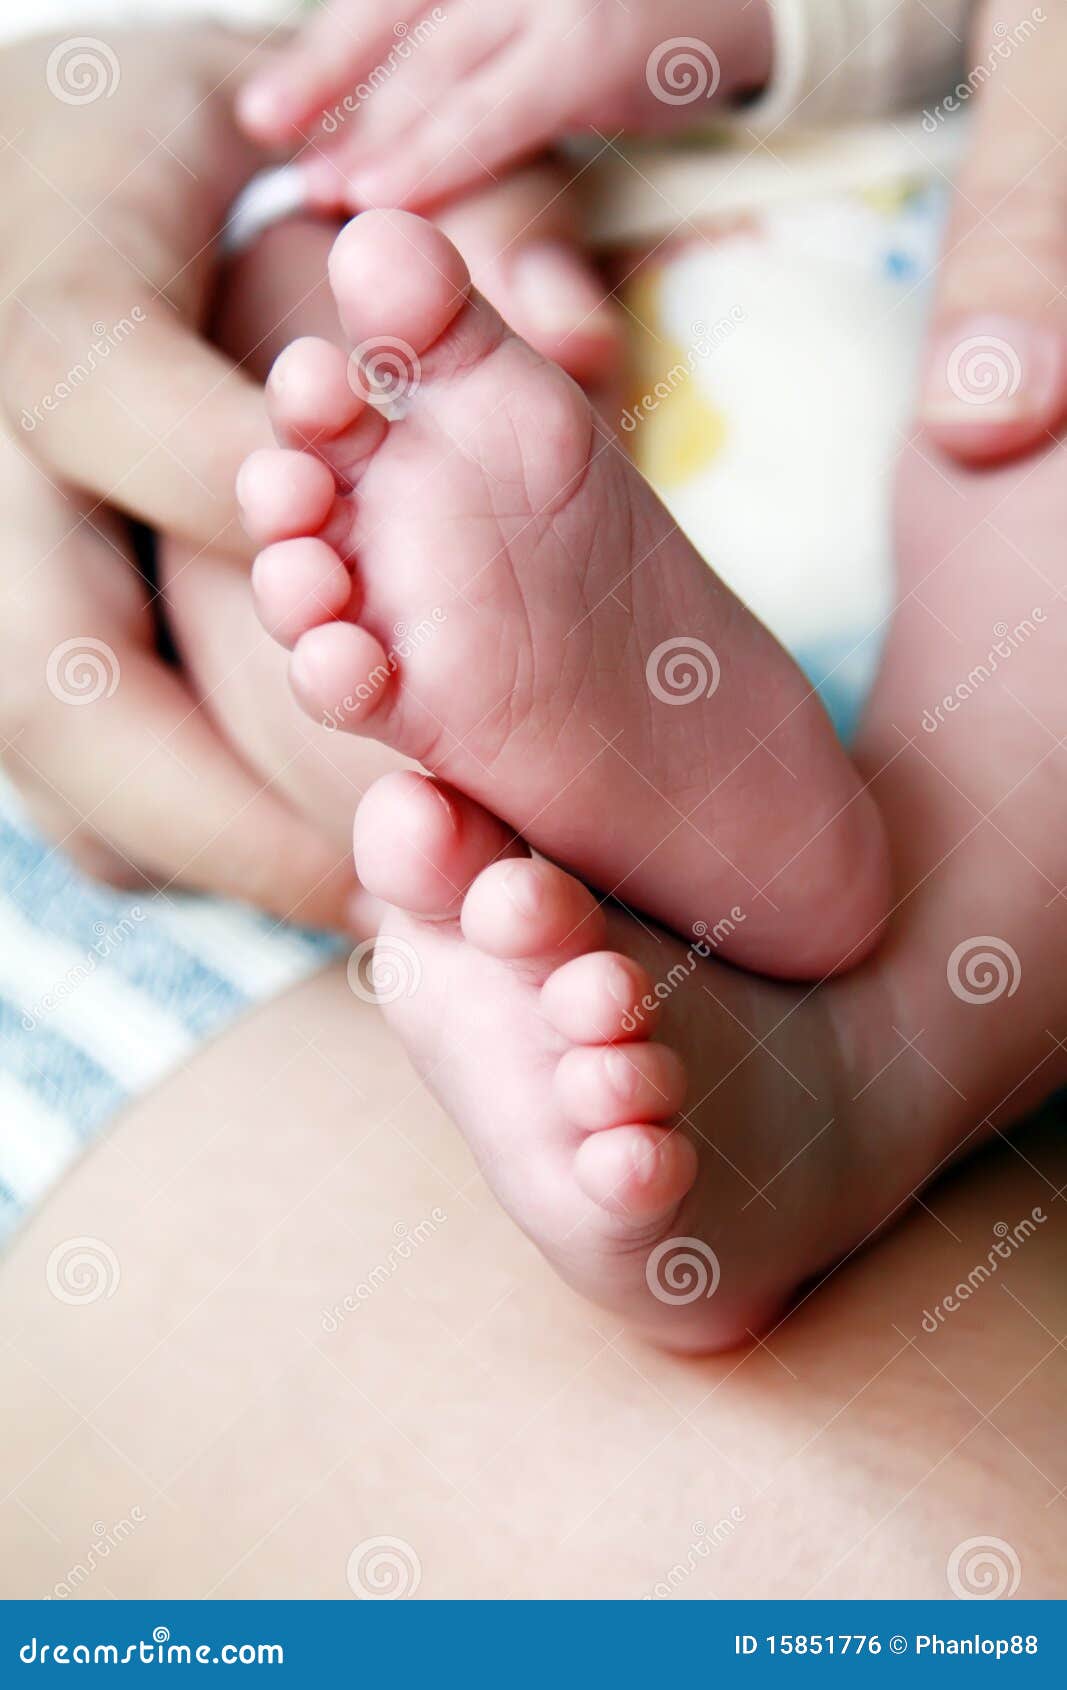 Целовал ноги маме. Ножки малыша. Красивые ножки малыши. Ножки новорожденного ребенка. Ступни младенца.